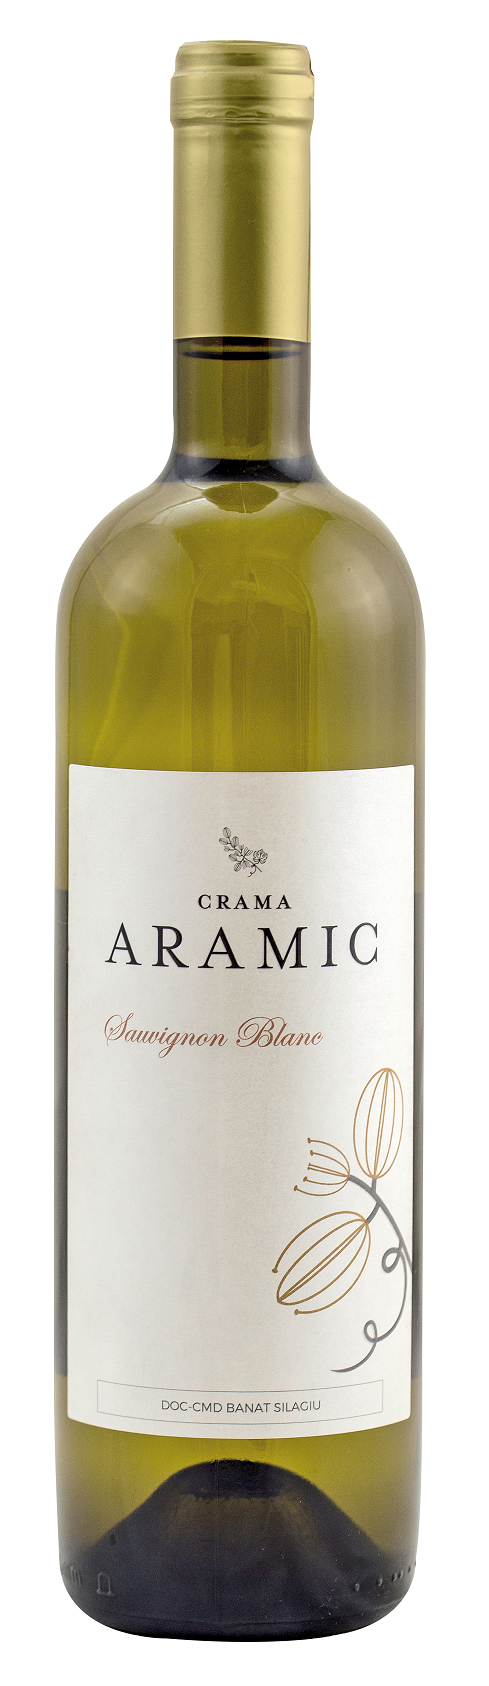 Vin alb - Aramic, Sauvignon Blanc, sec, 2019 | Crama Aramic